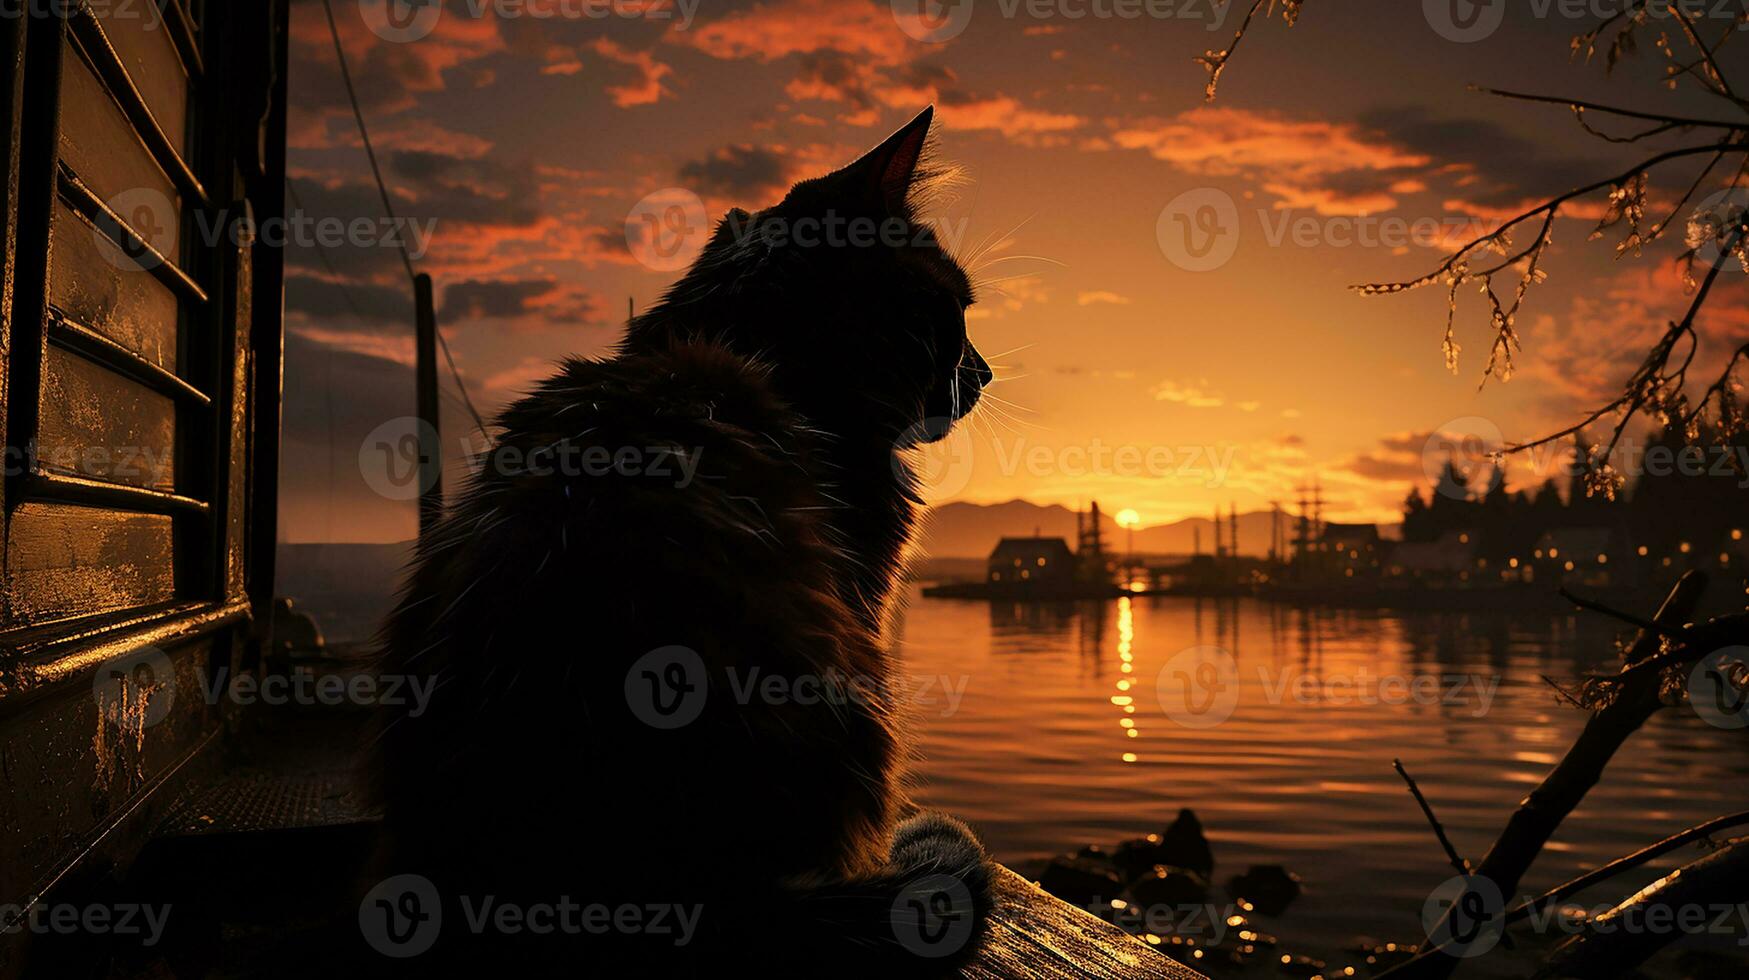 hermosa negro gato imagen, linda felino animal antecedentes imagen, ai generado foto